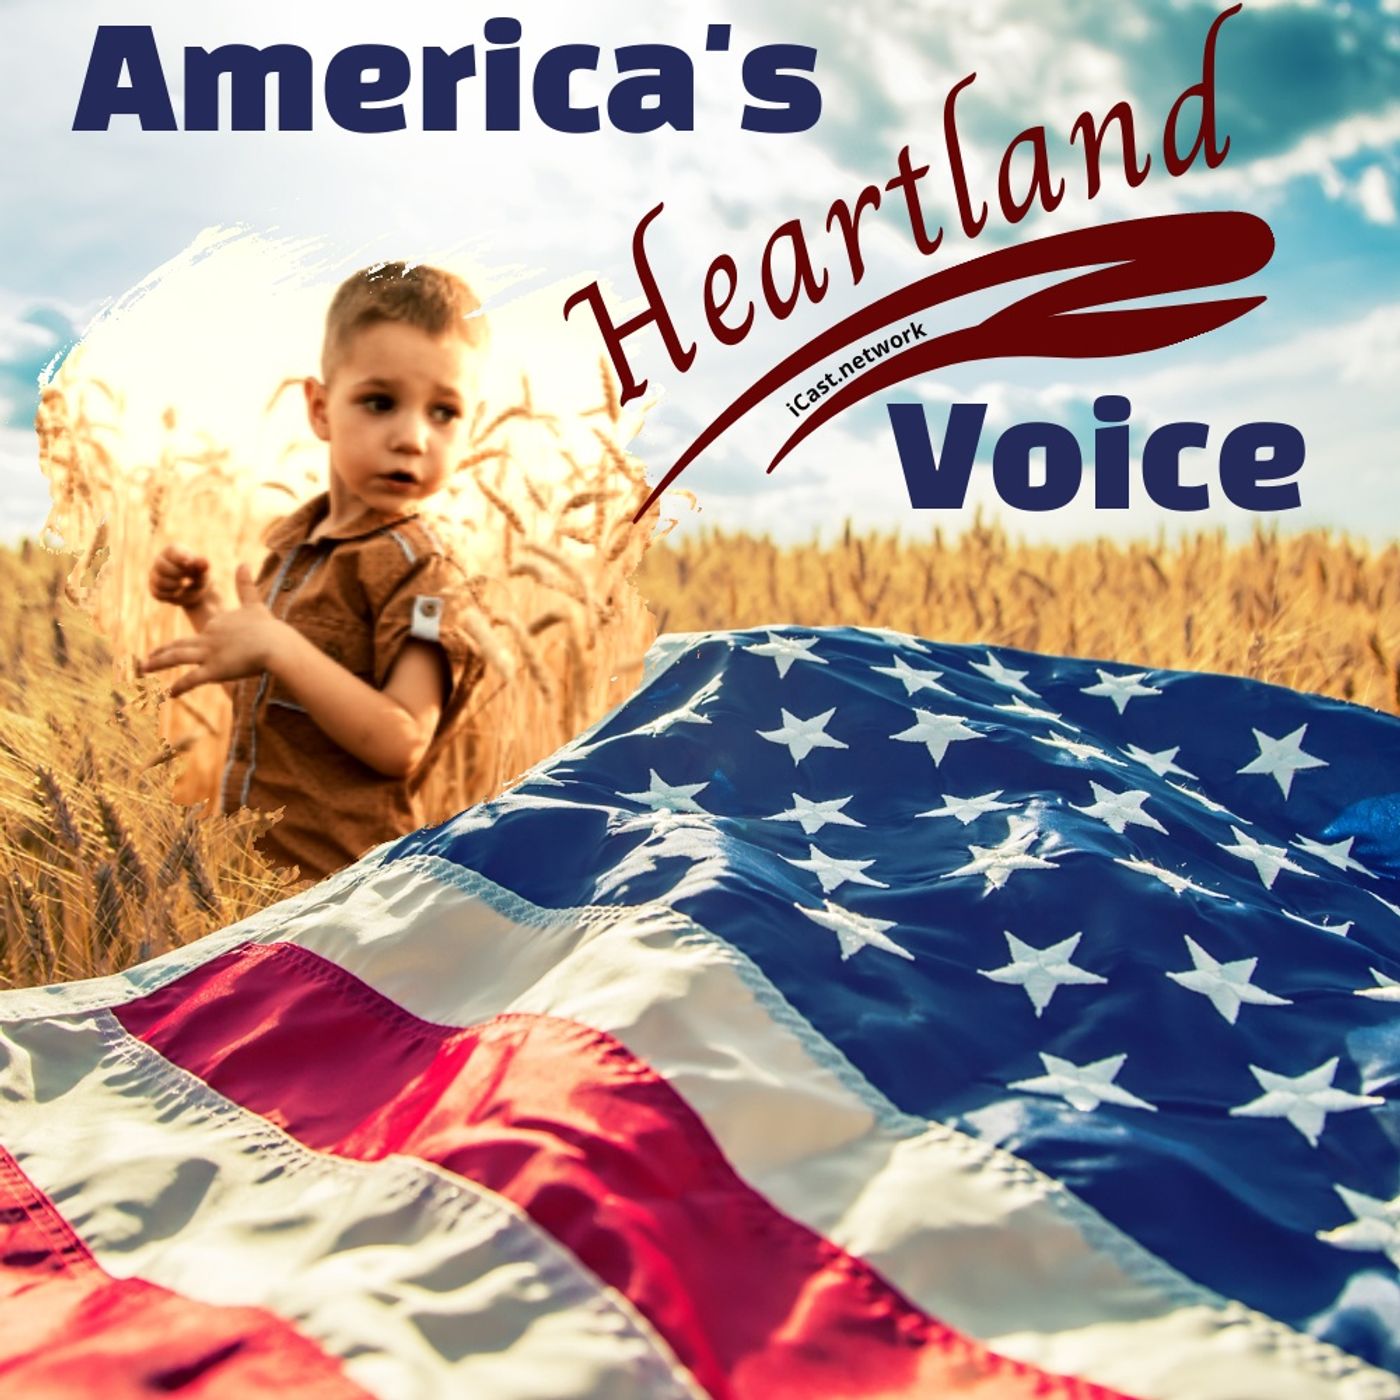 America's HeartlandVoice